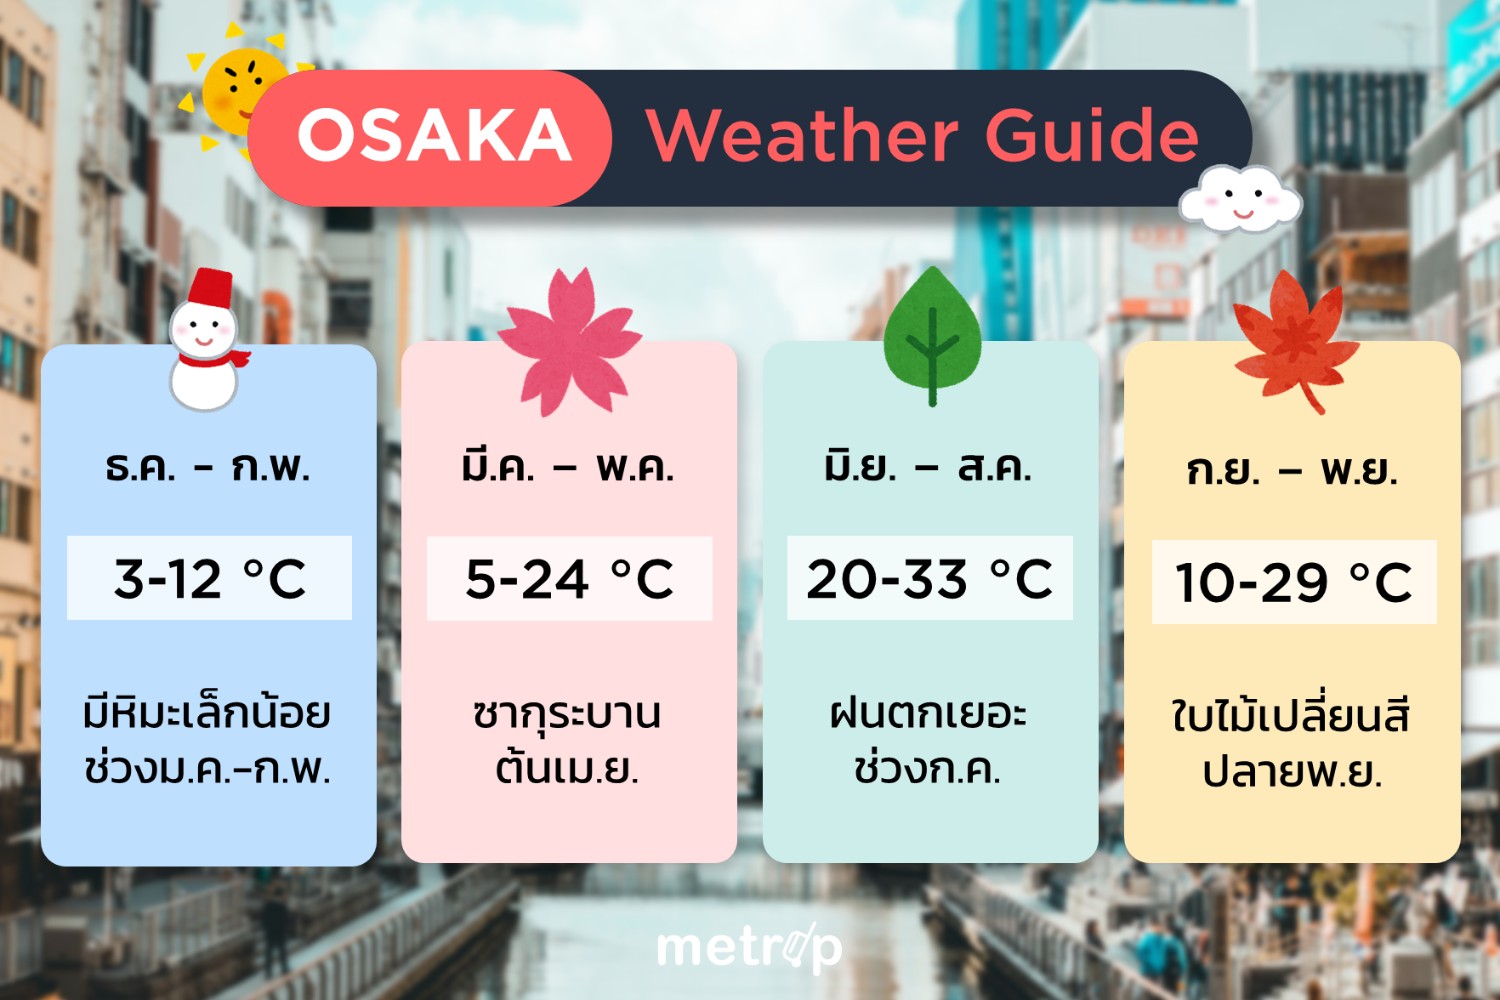 Osaka Weather Guide - ไปโอซาก้า เดือนไหนดี มีอะไรดู? | Metrip - Pantip